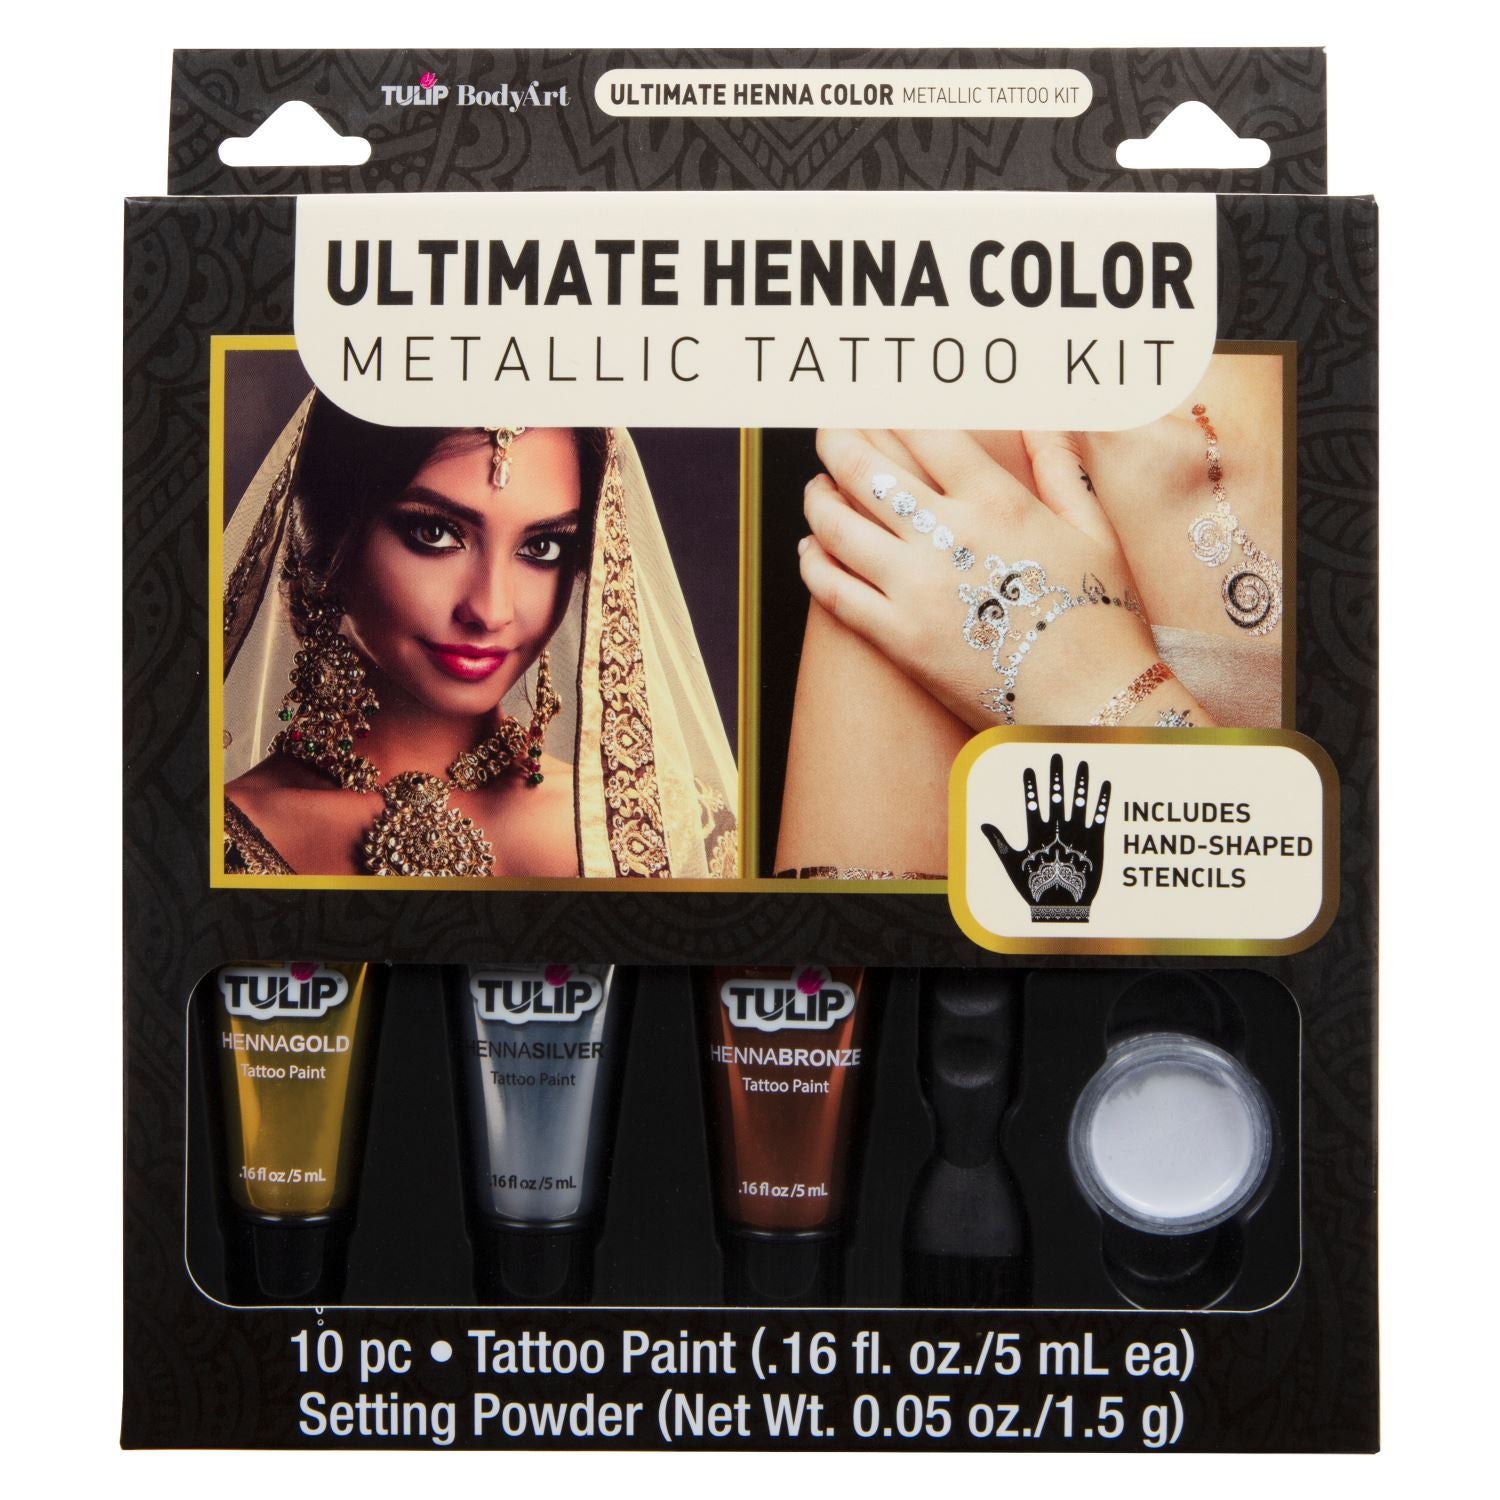 Tulip Body Art Ultimate Henna Color Metallic Tattoo Kit - 1